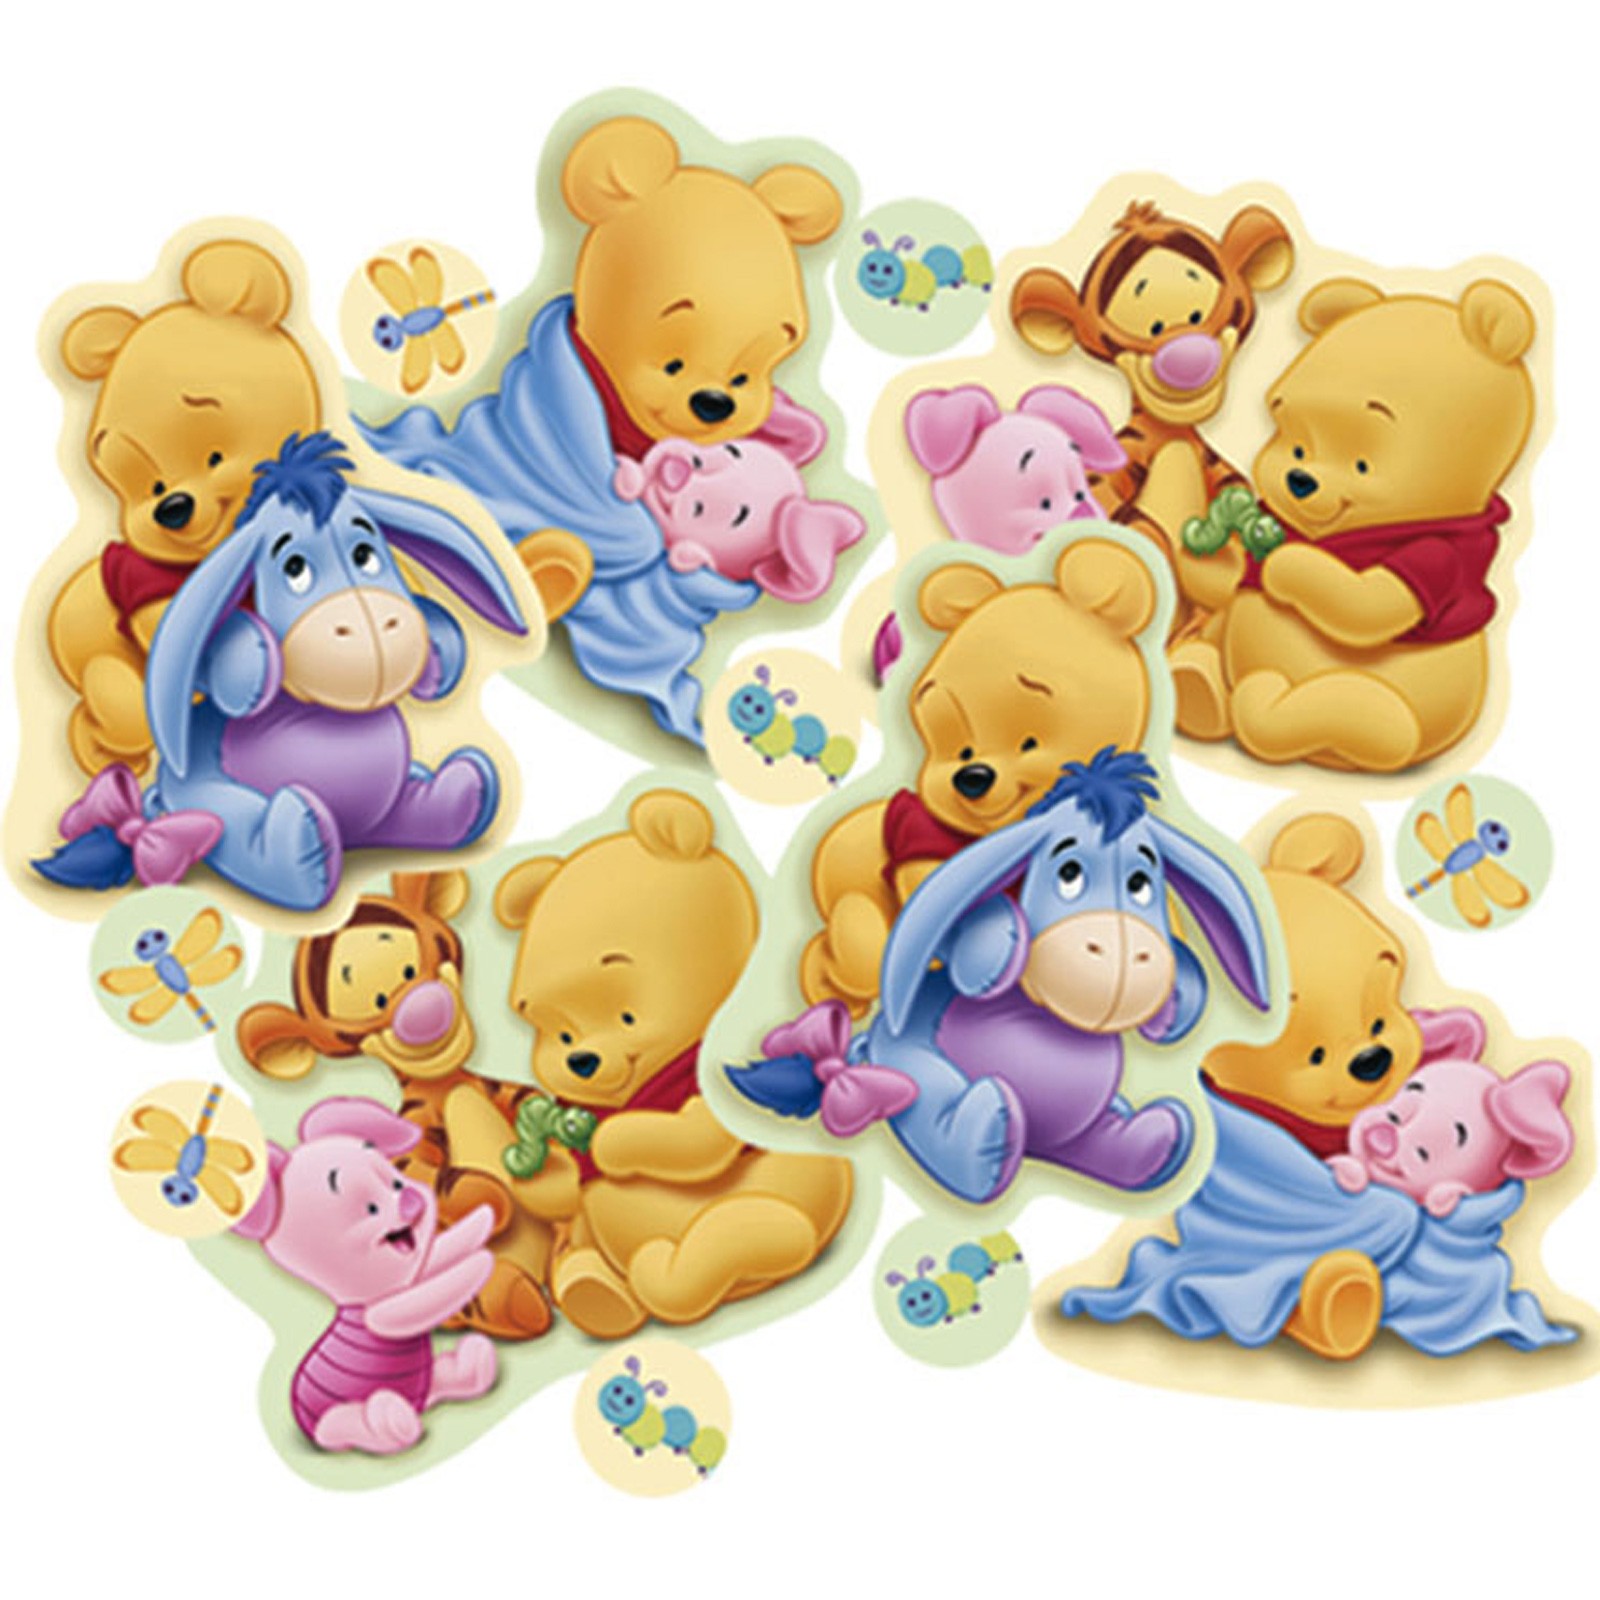 Baby Pooh Bear Wallpaper